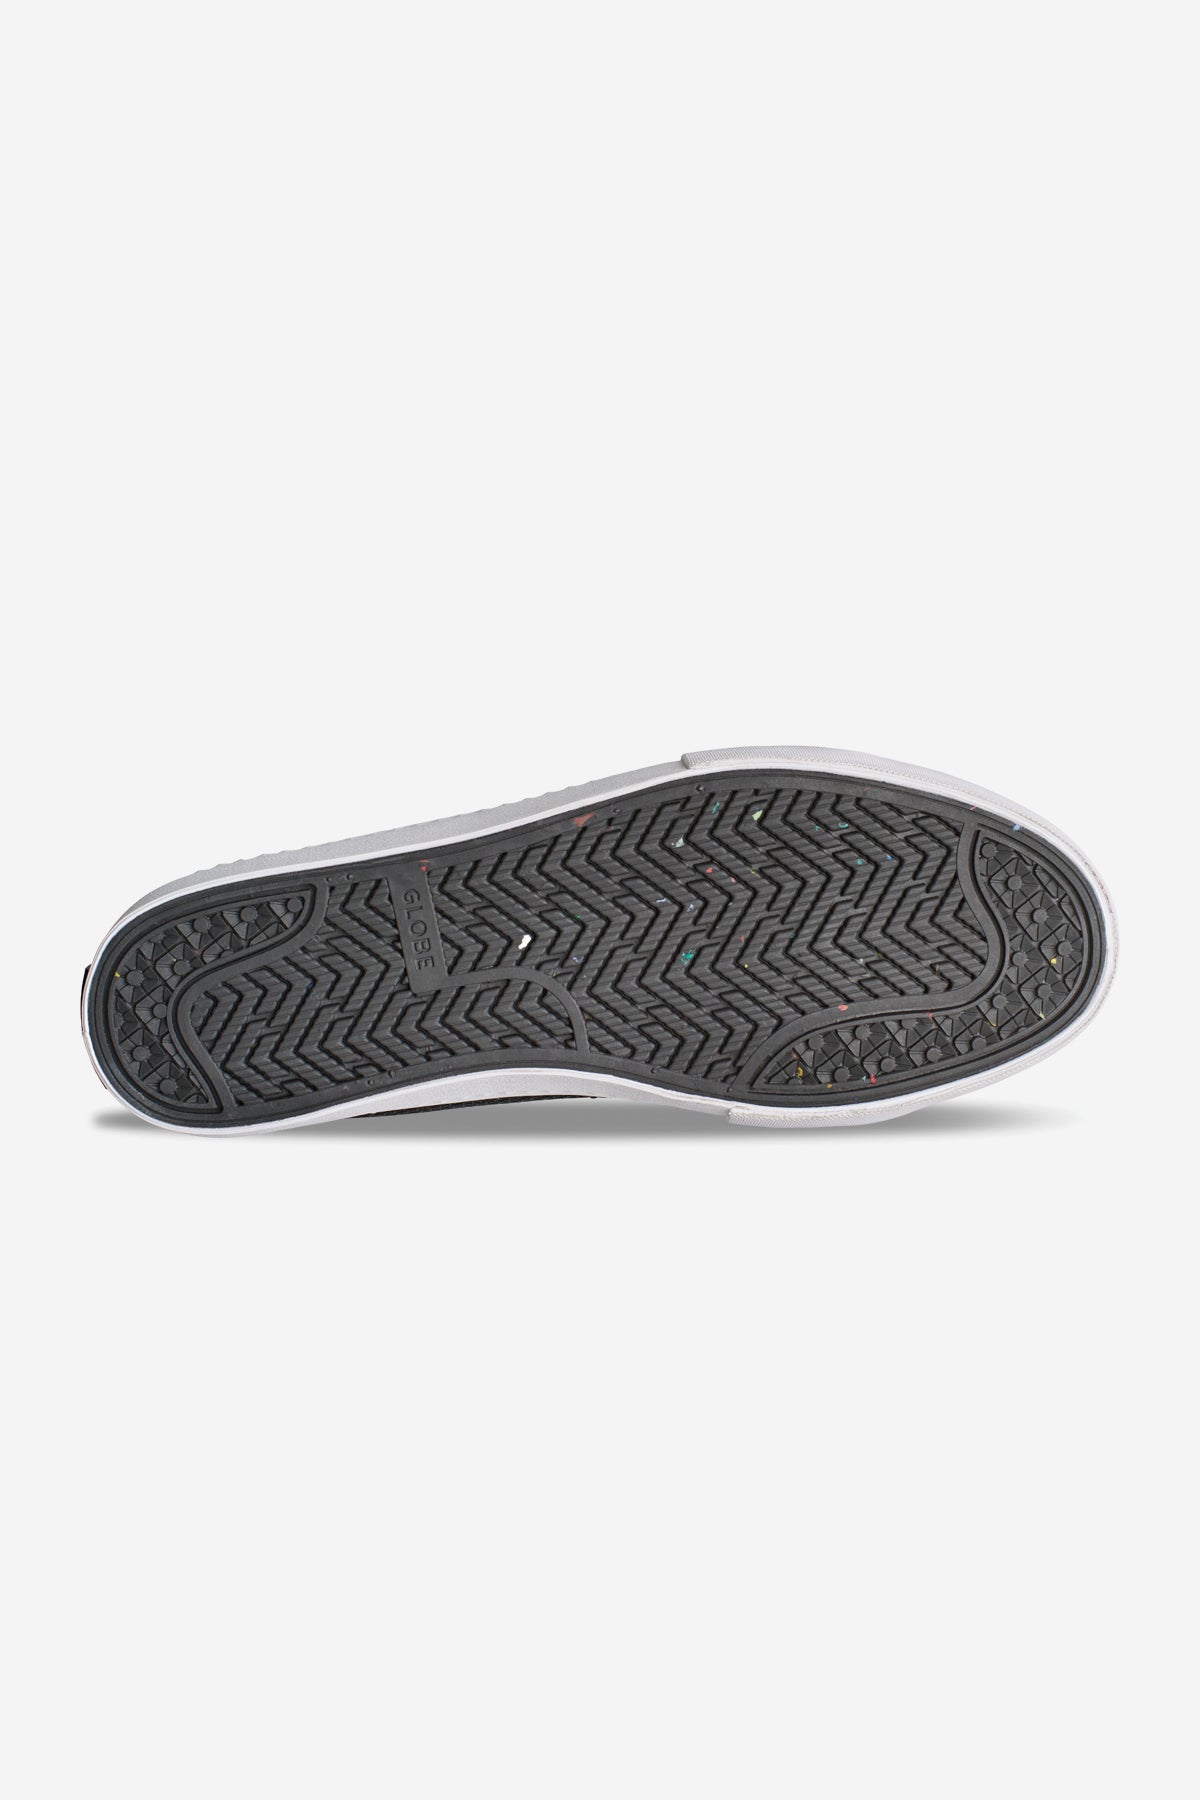 Globe - La Knit - Black/White - skateboard Scarpe